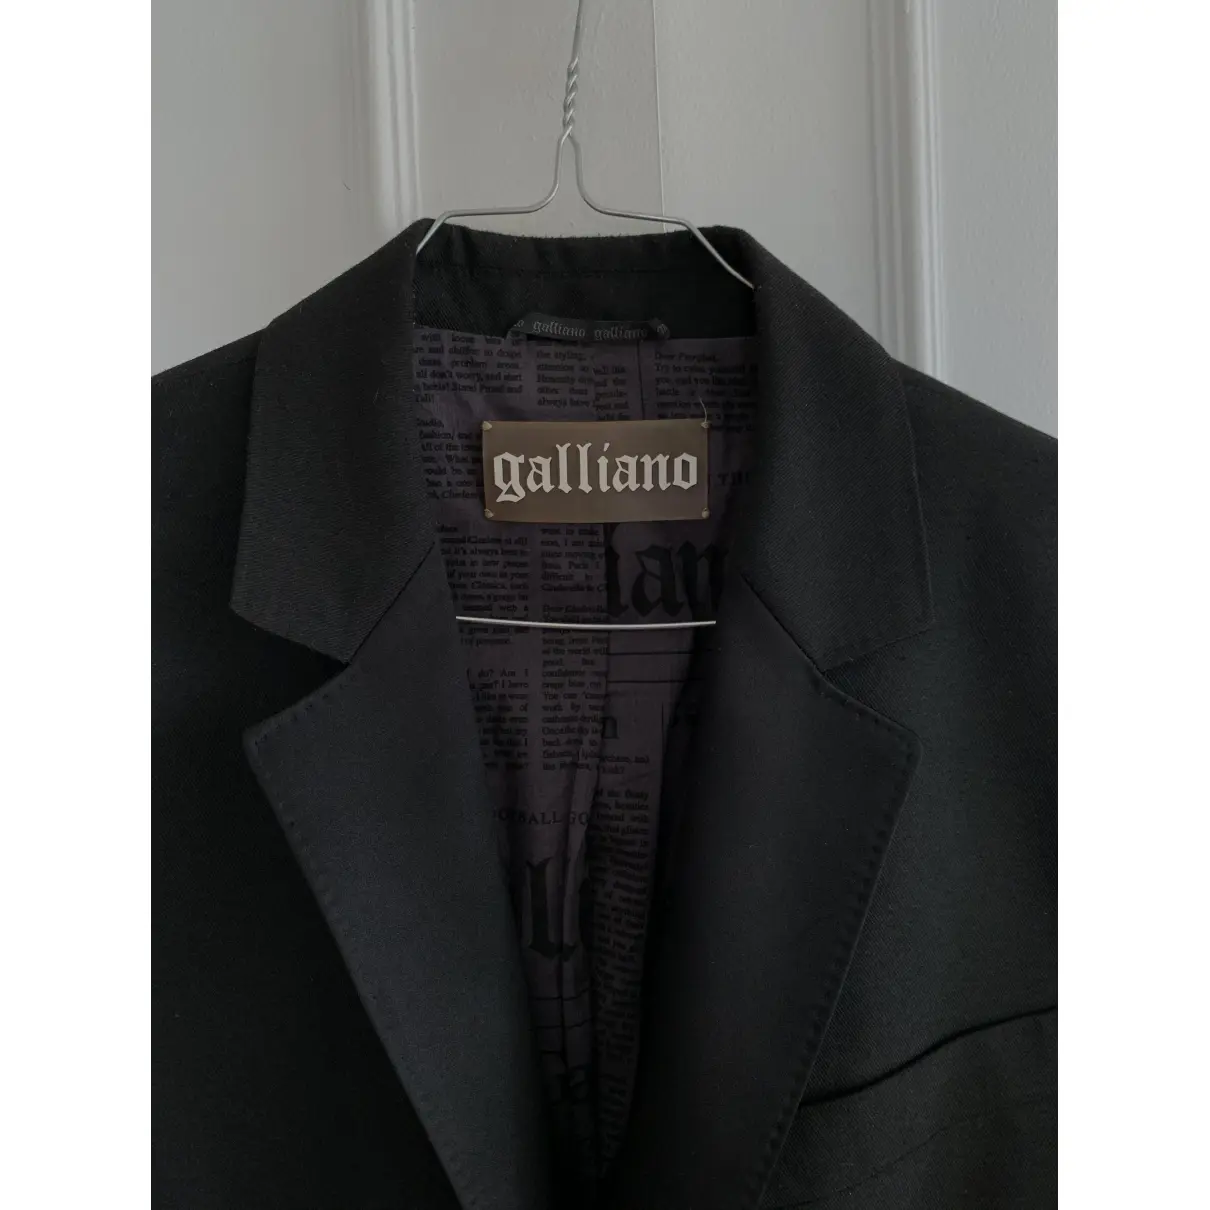 Buy John Galliano Black Cotton Jacket online